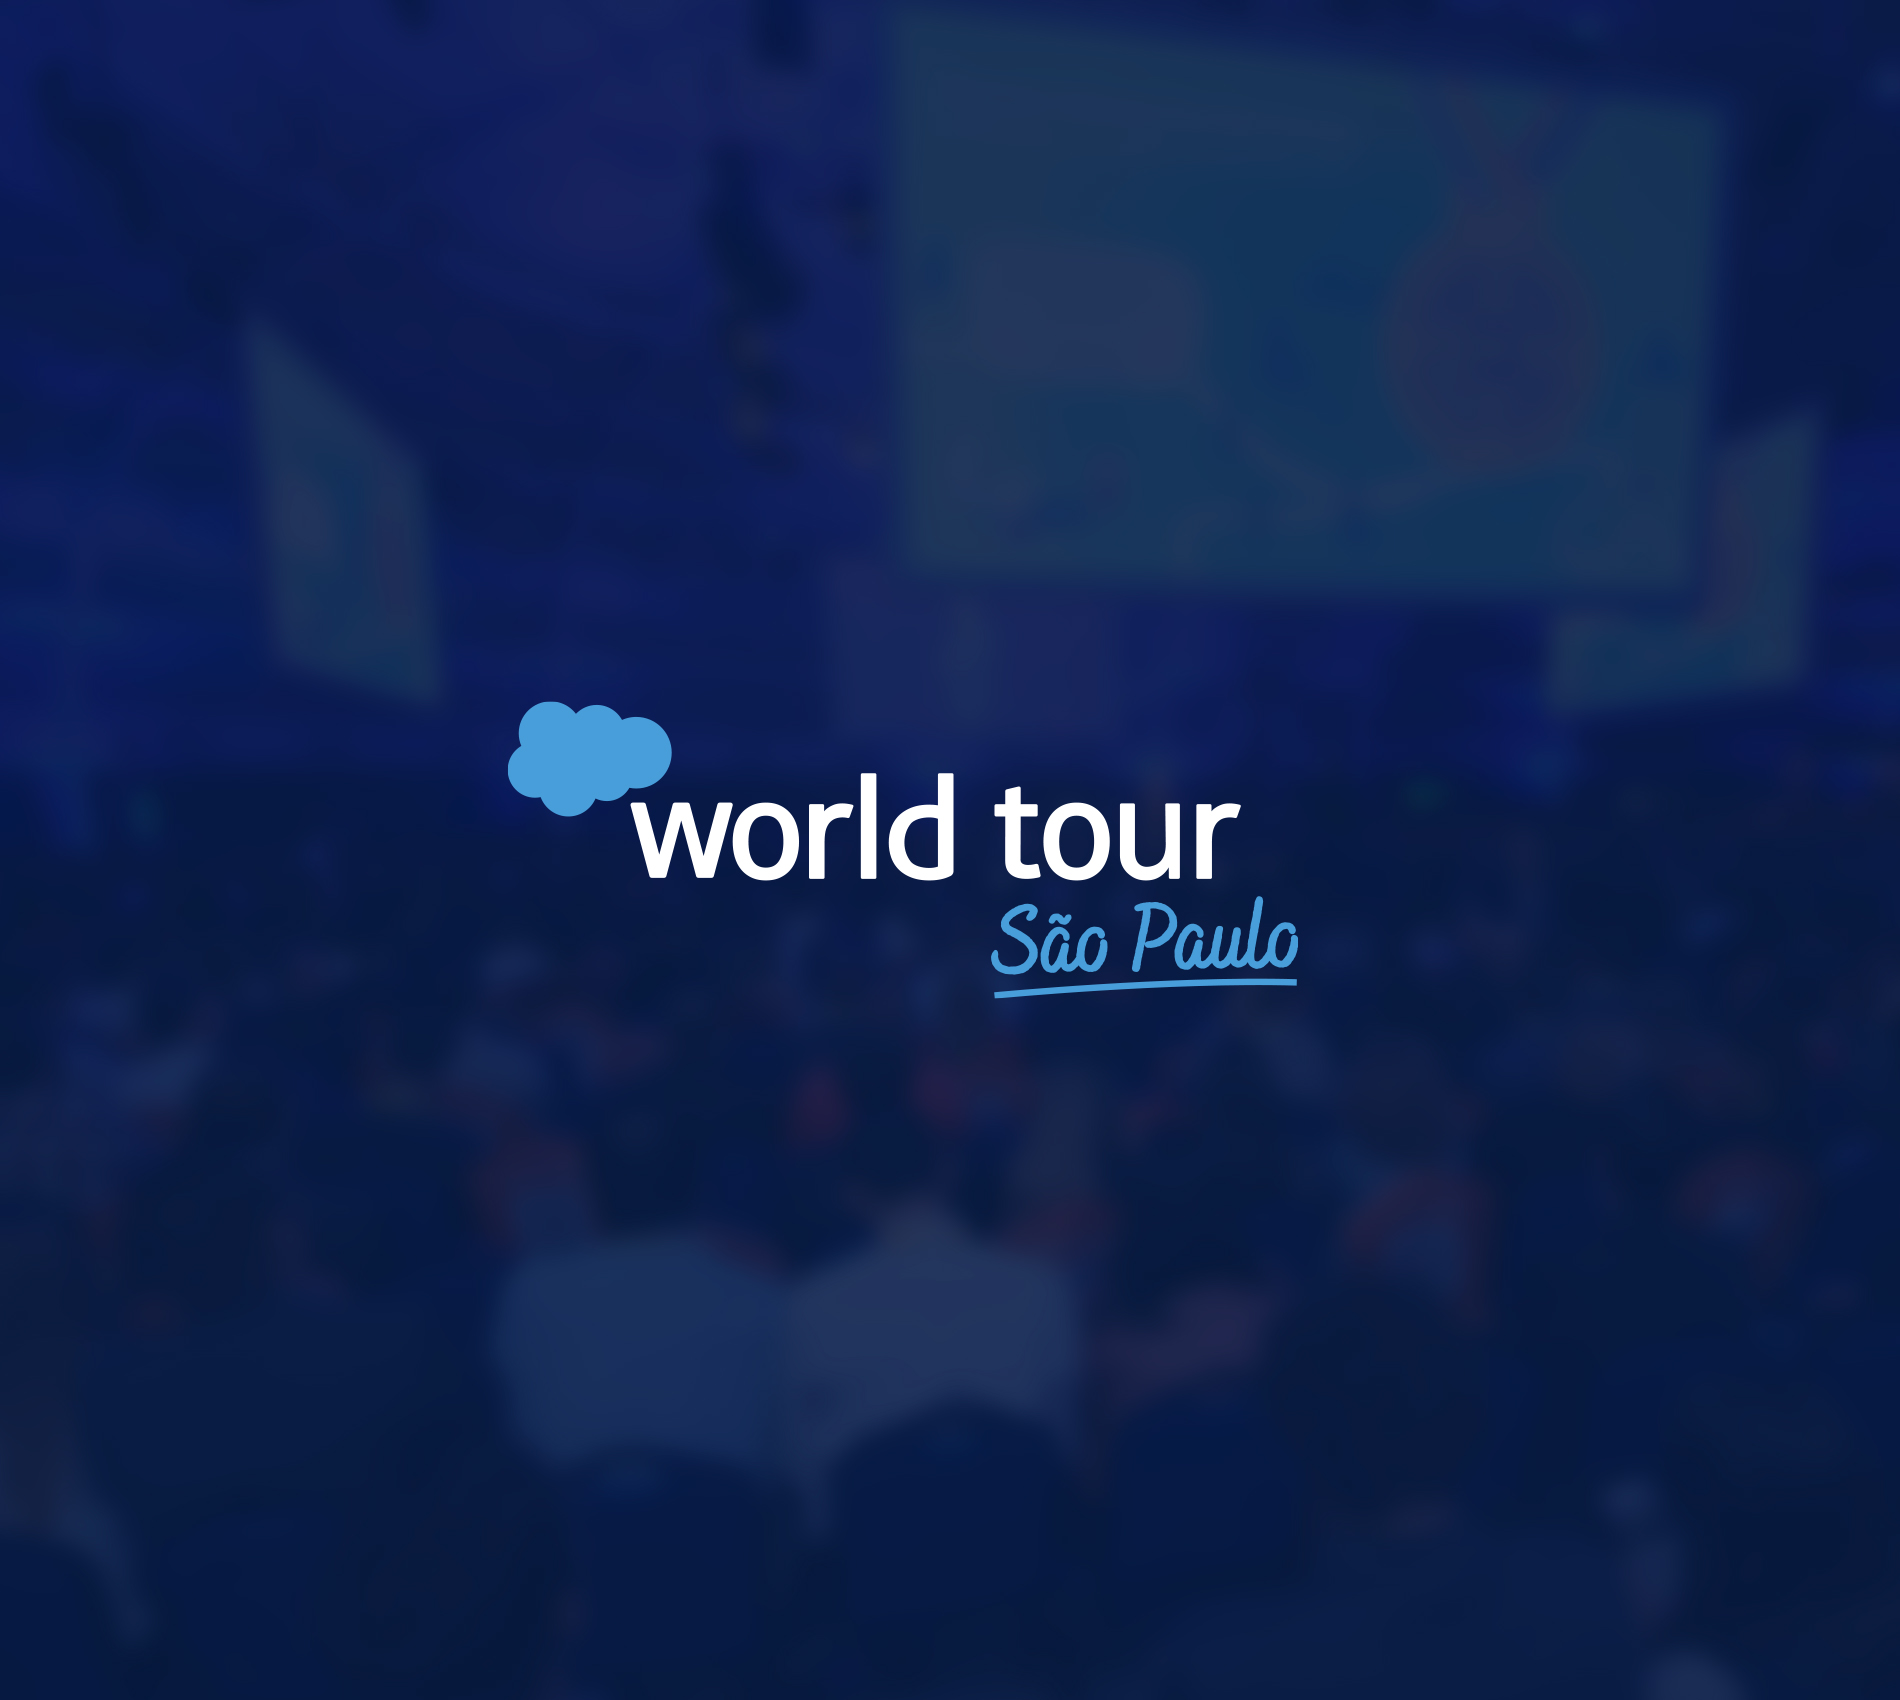 Salesforce World Tour in Brazil | PagBrasil